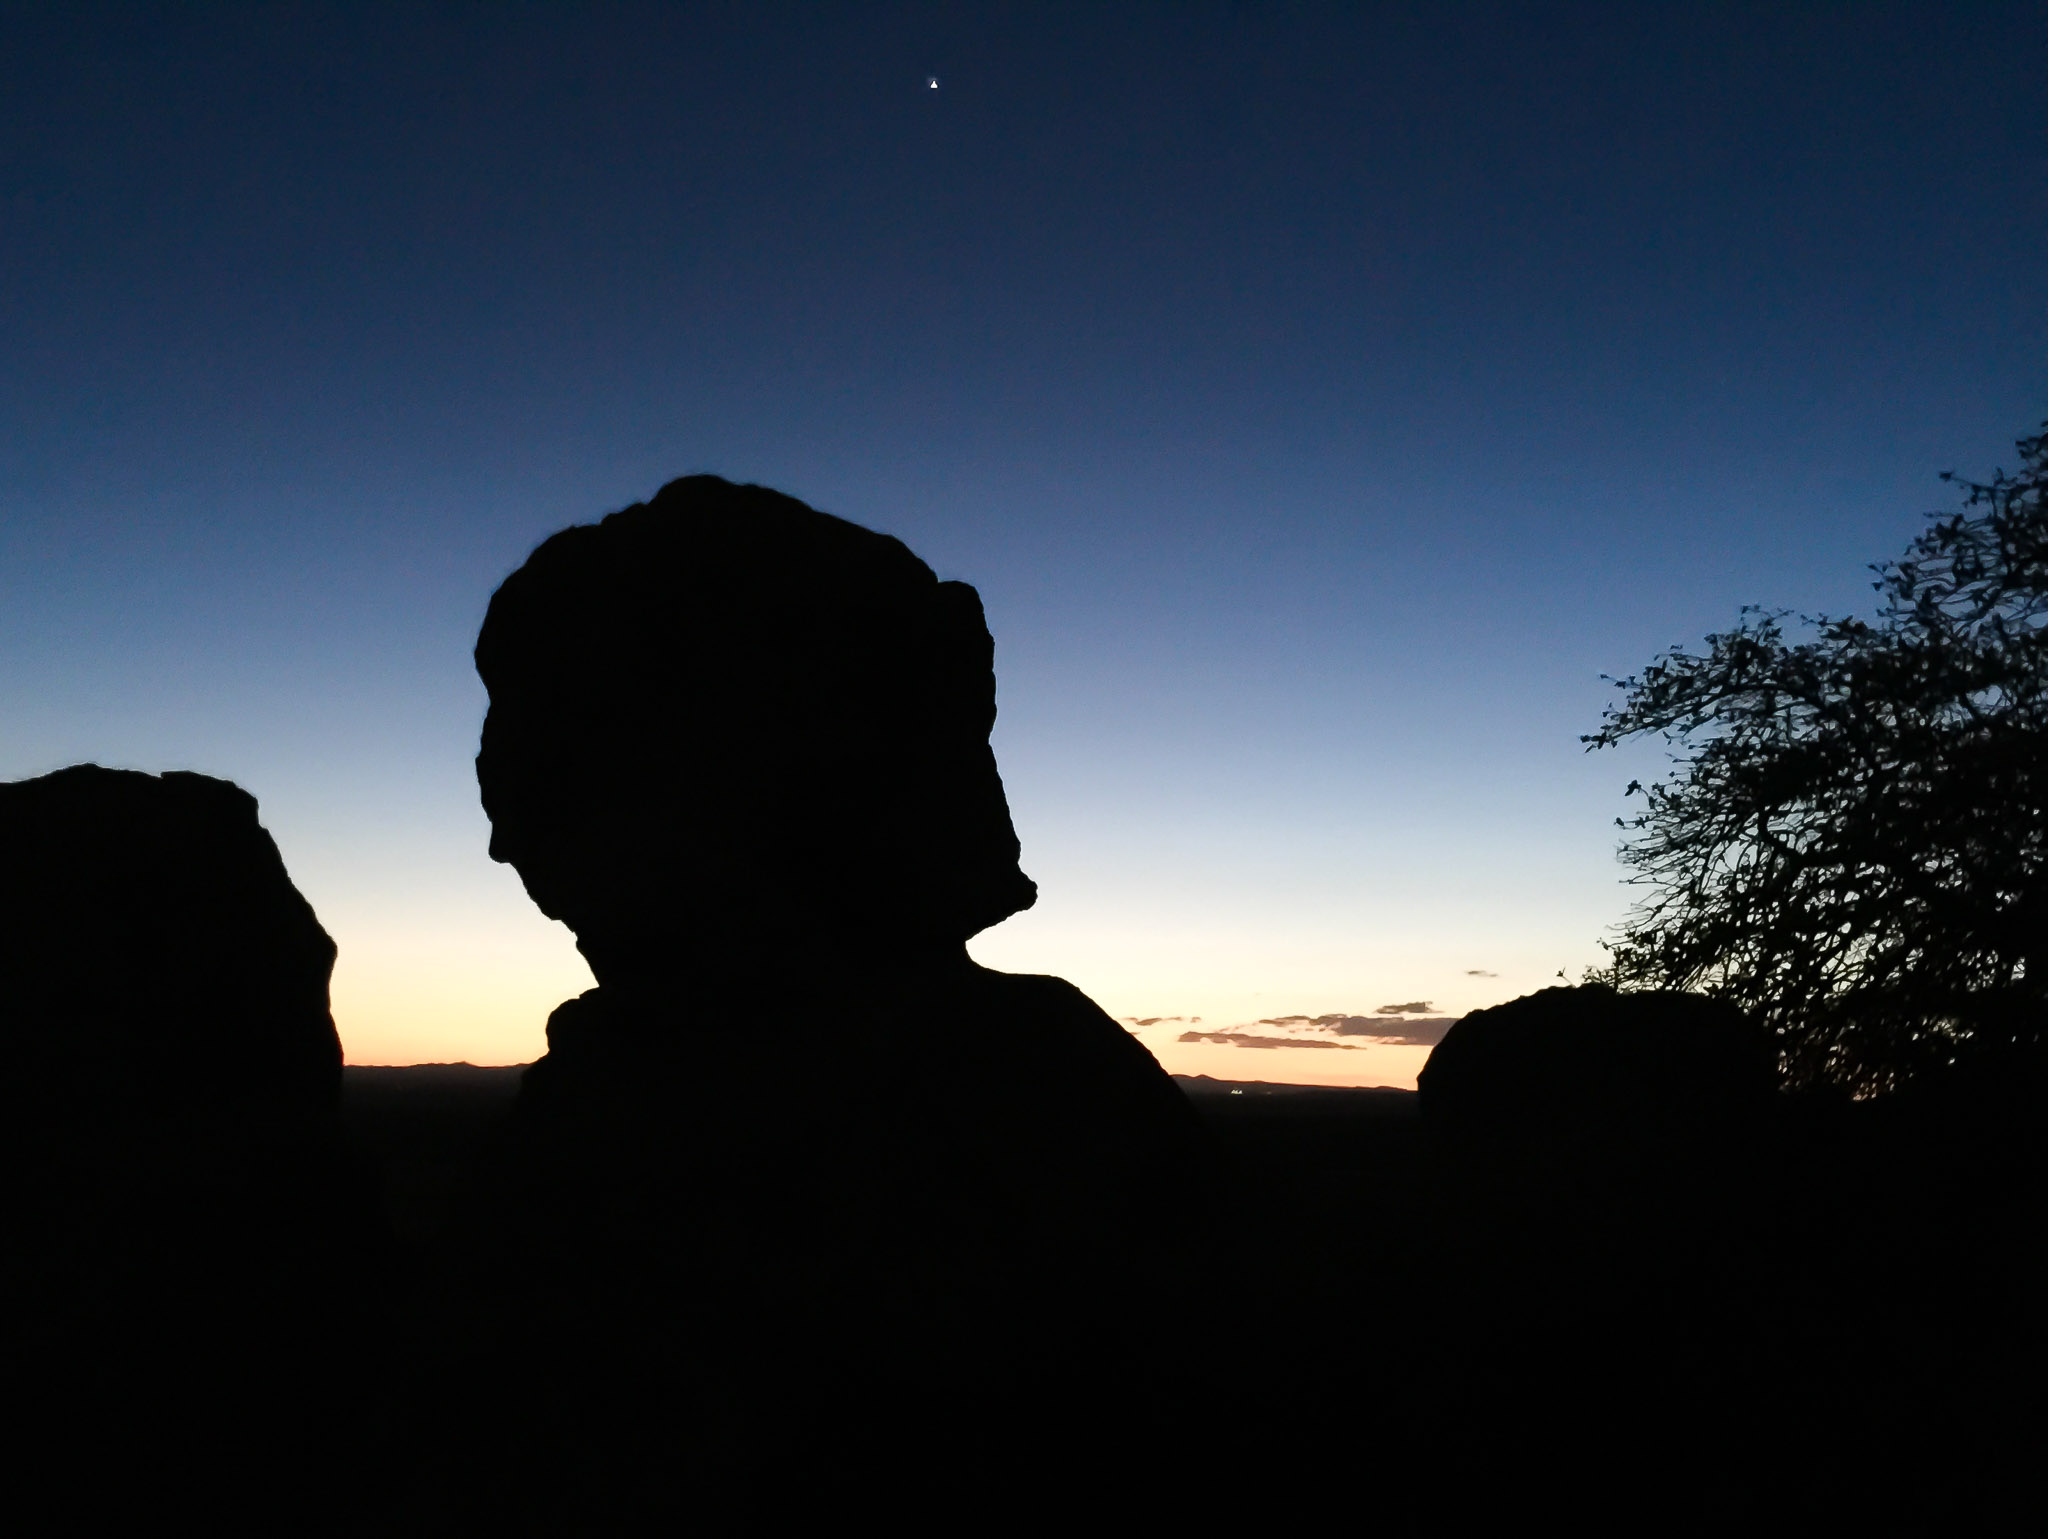 Venus & rock formation at sunset, City of Rocks State Park, Faywood NM, April 1, 2015